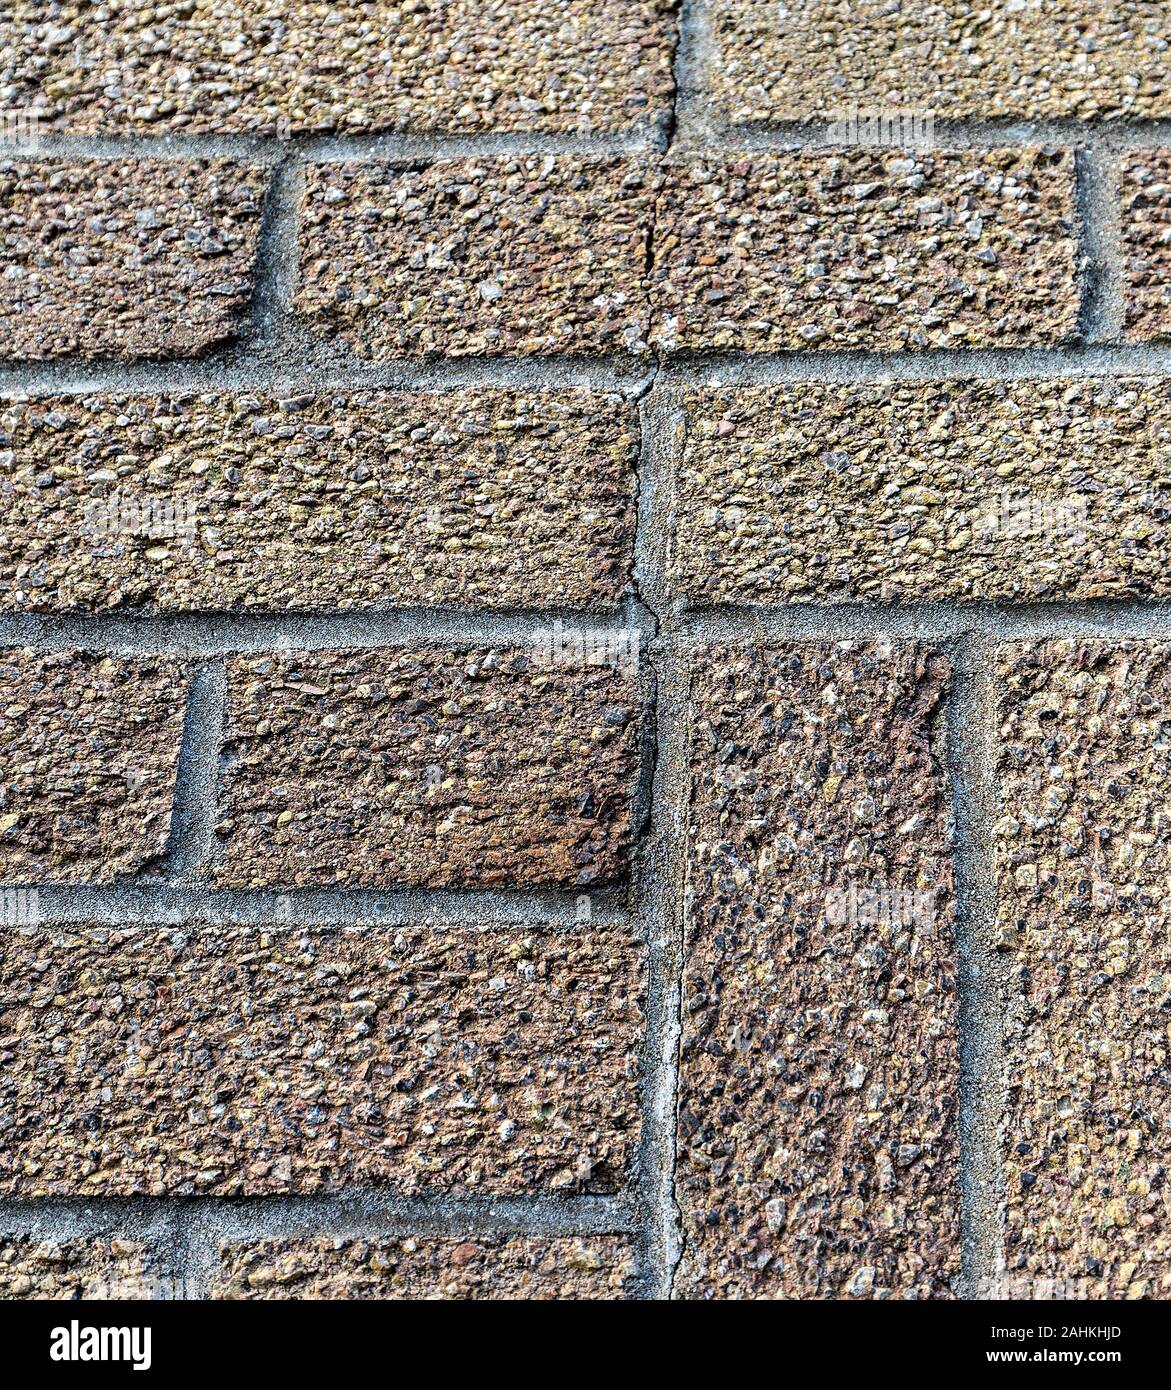 Crack running through bricks and mortar of house wall, UK Stock Photo